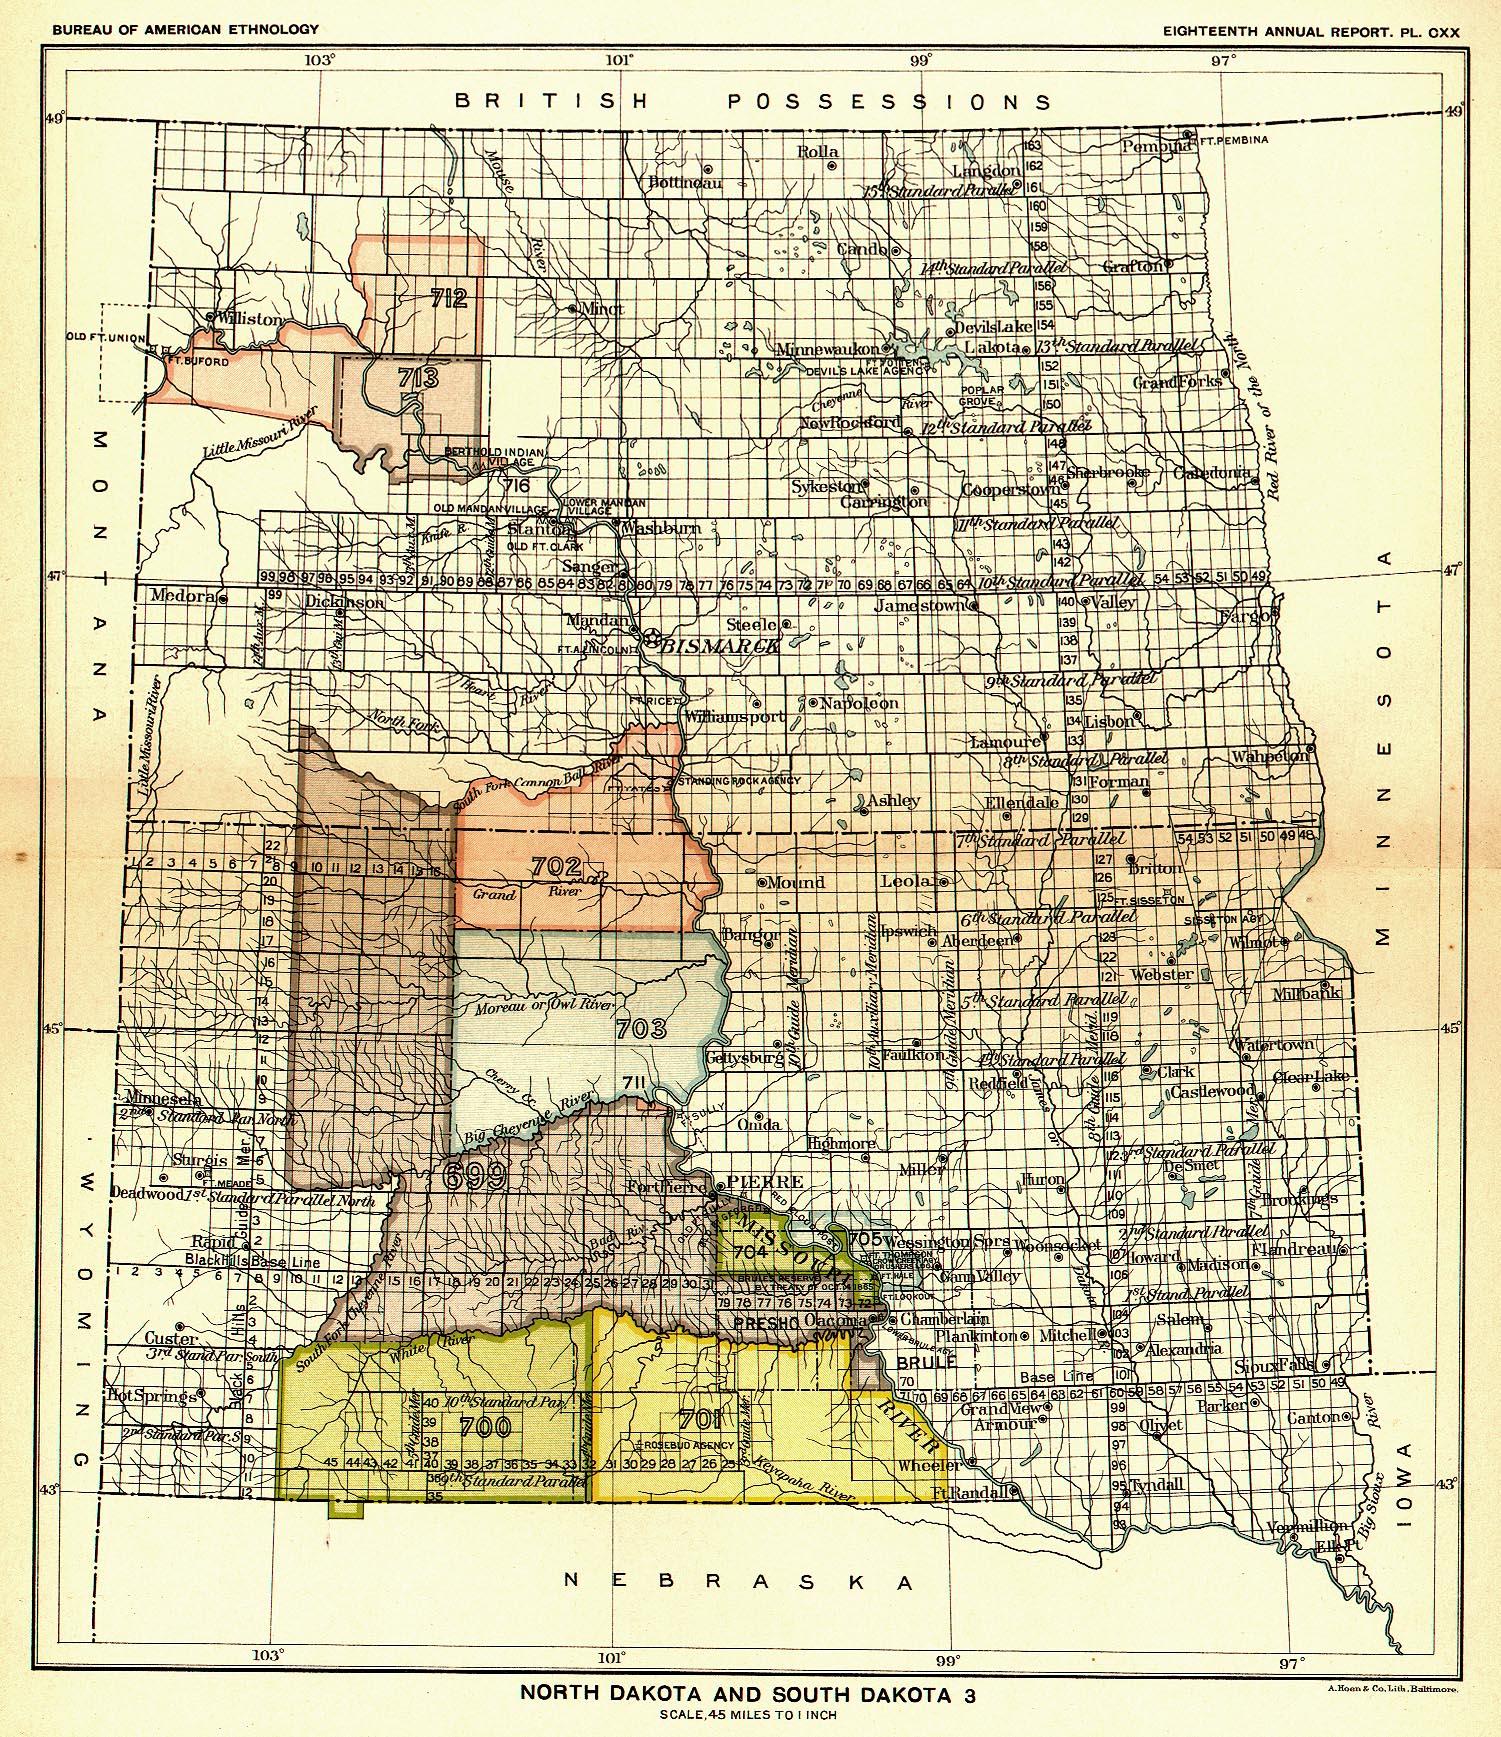  North Dakota and South Dakota 3, 
Map 13